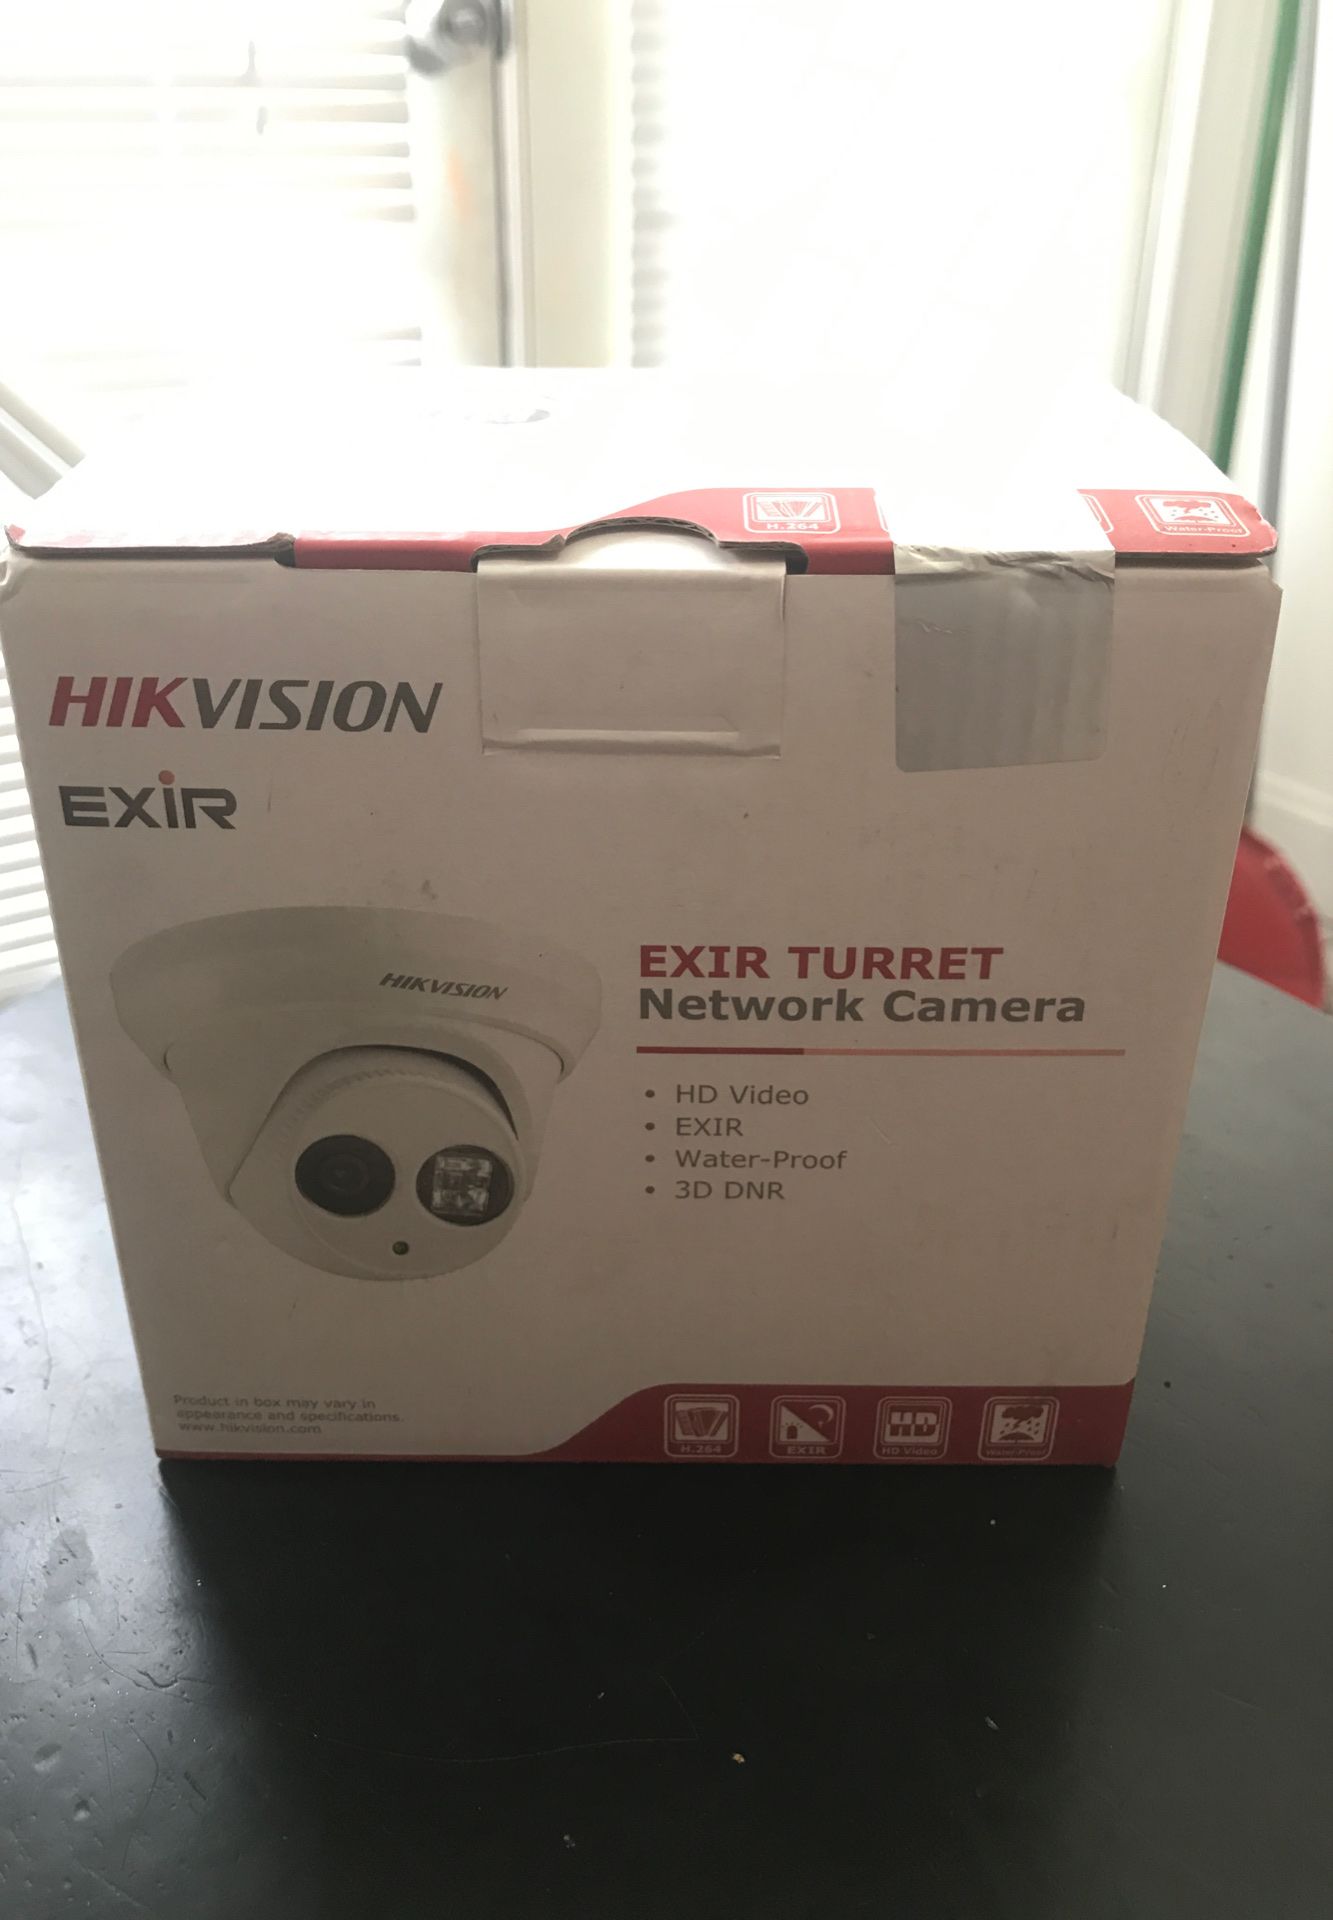 4 HIKVISION EXIR Network cameras